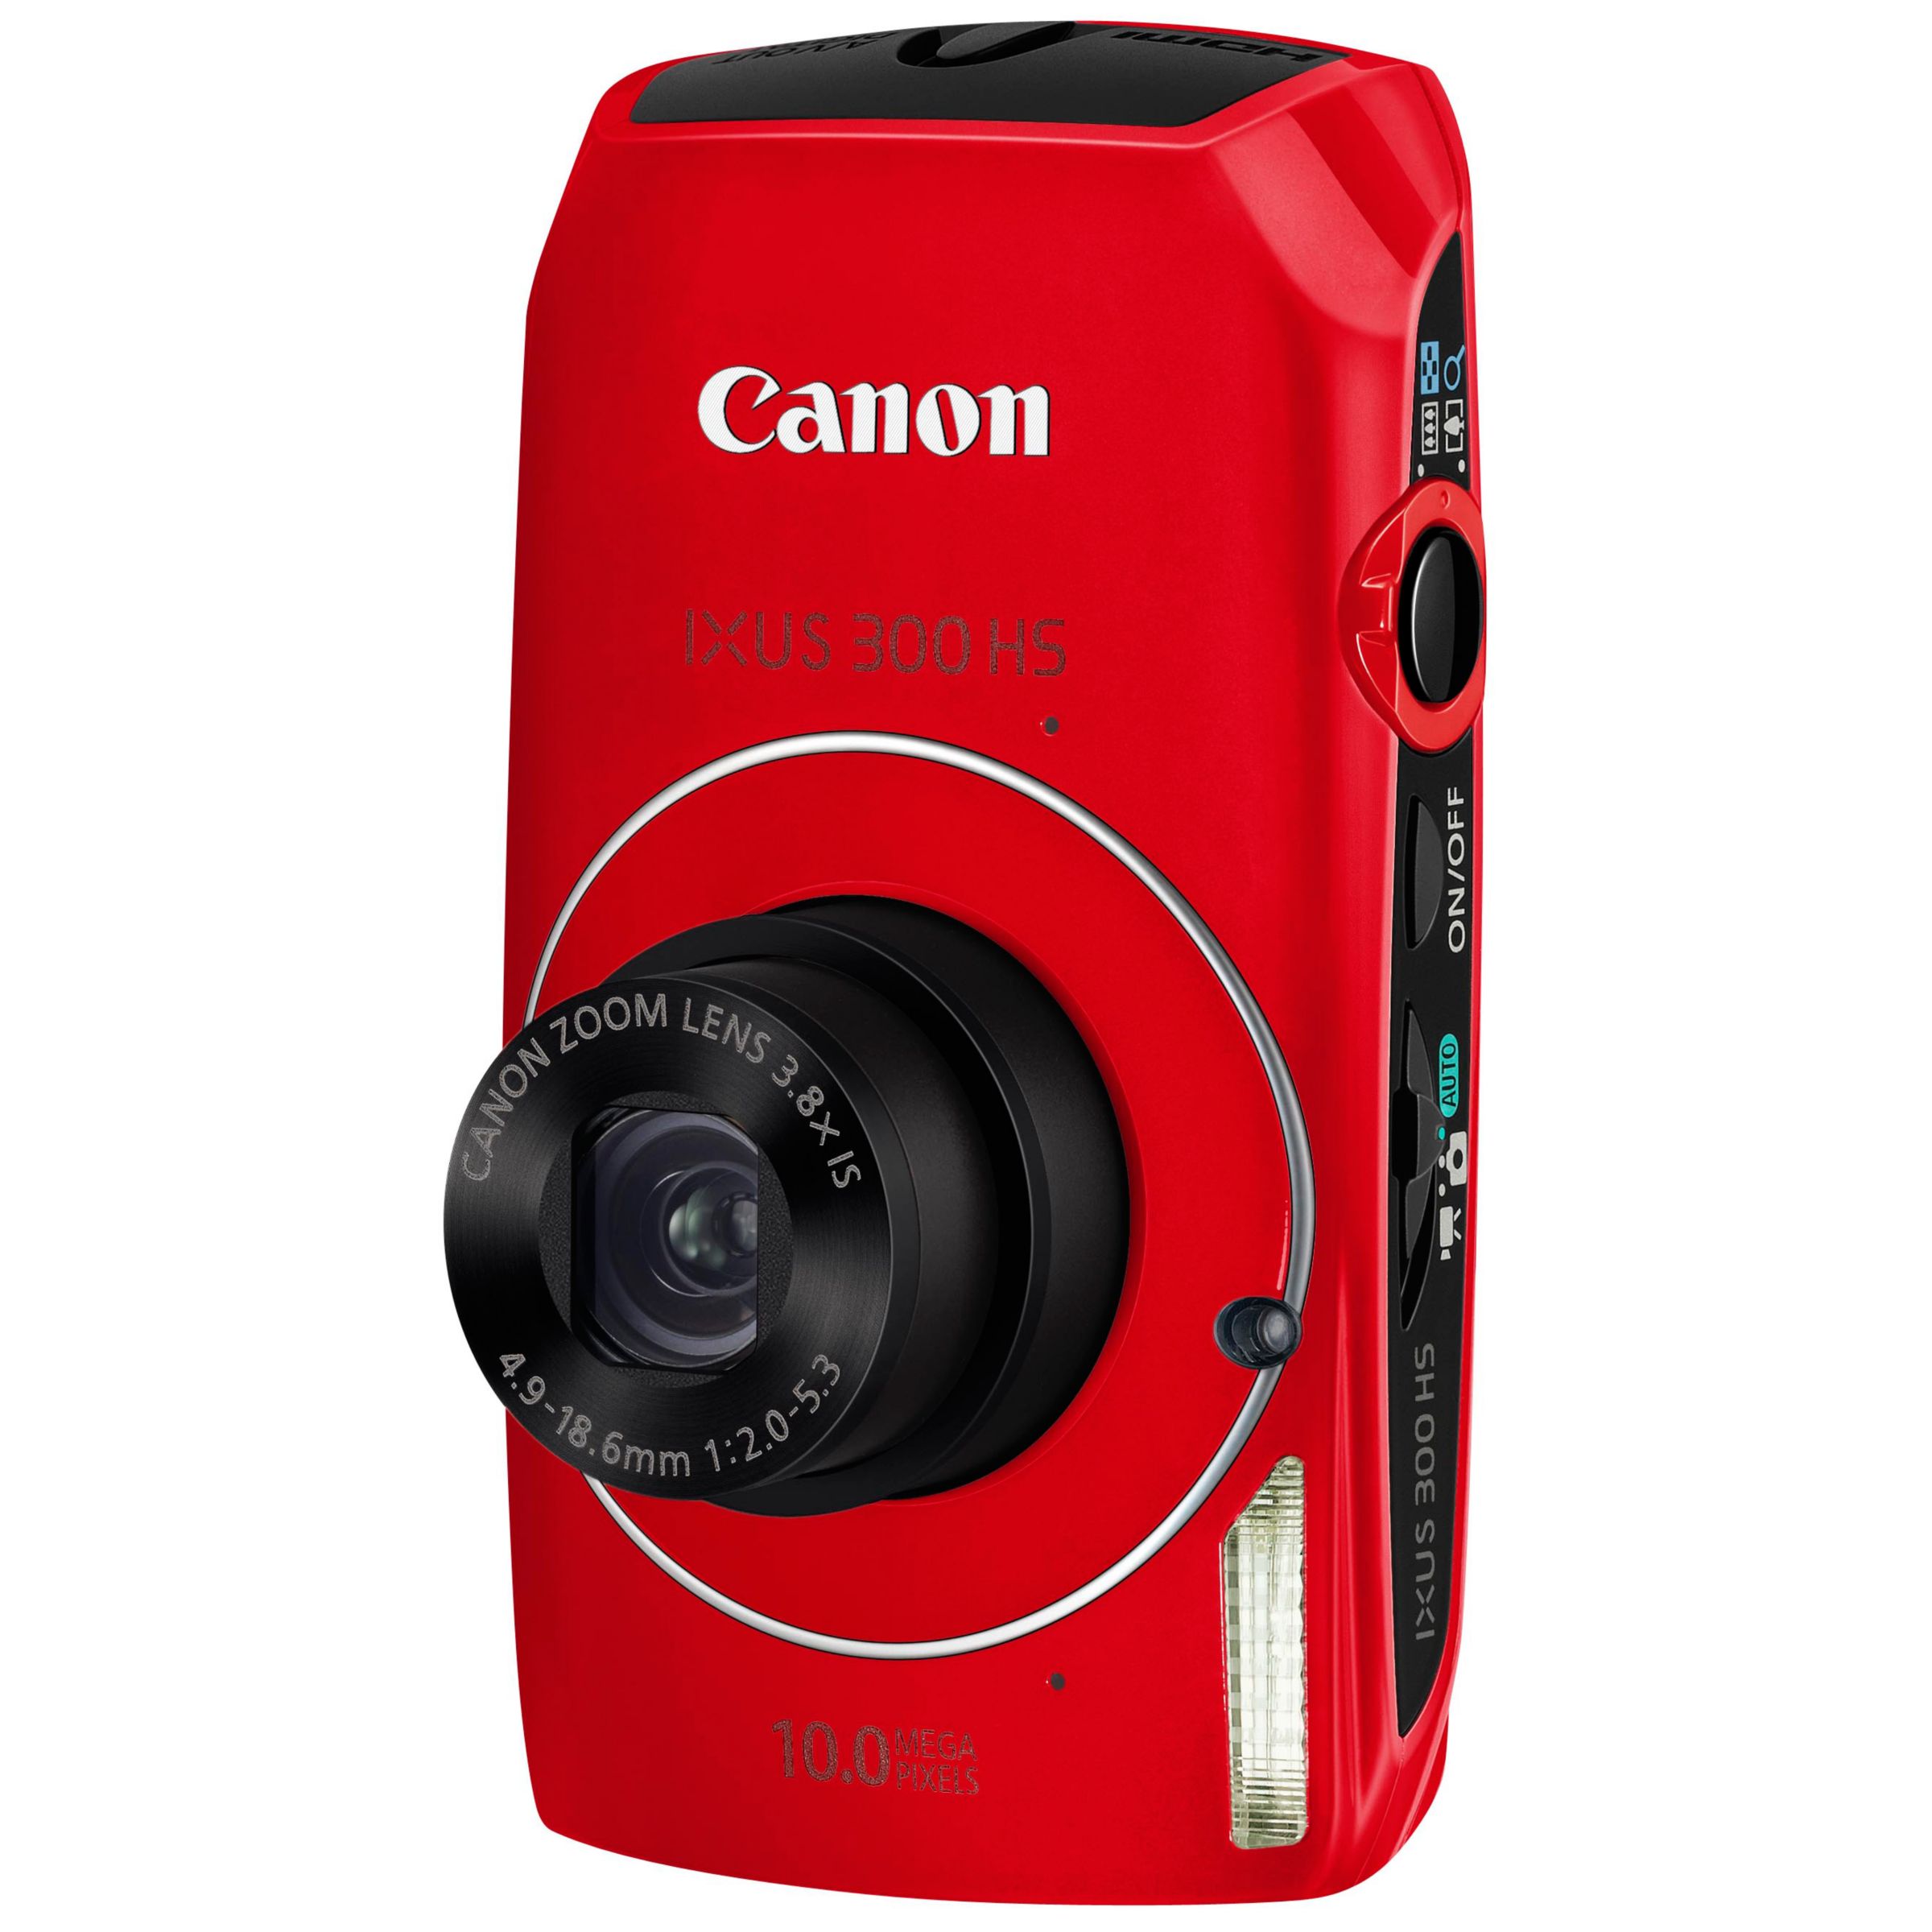 Canon IXUS 300 HS Digital Camera, Red at John Lewis